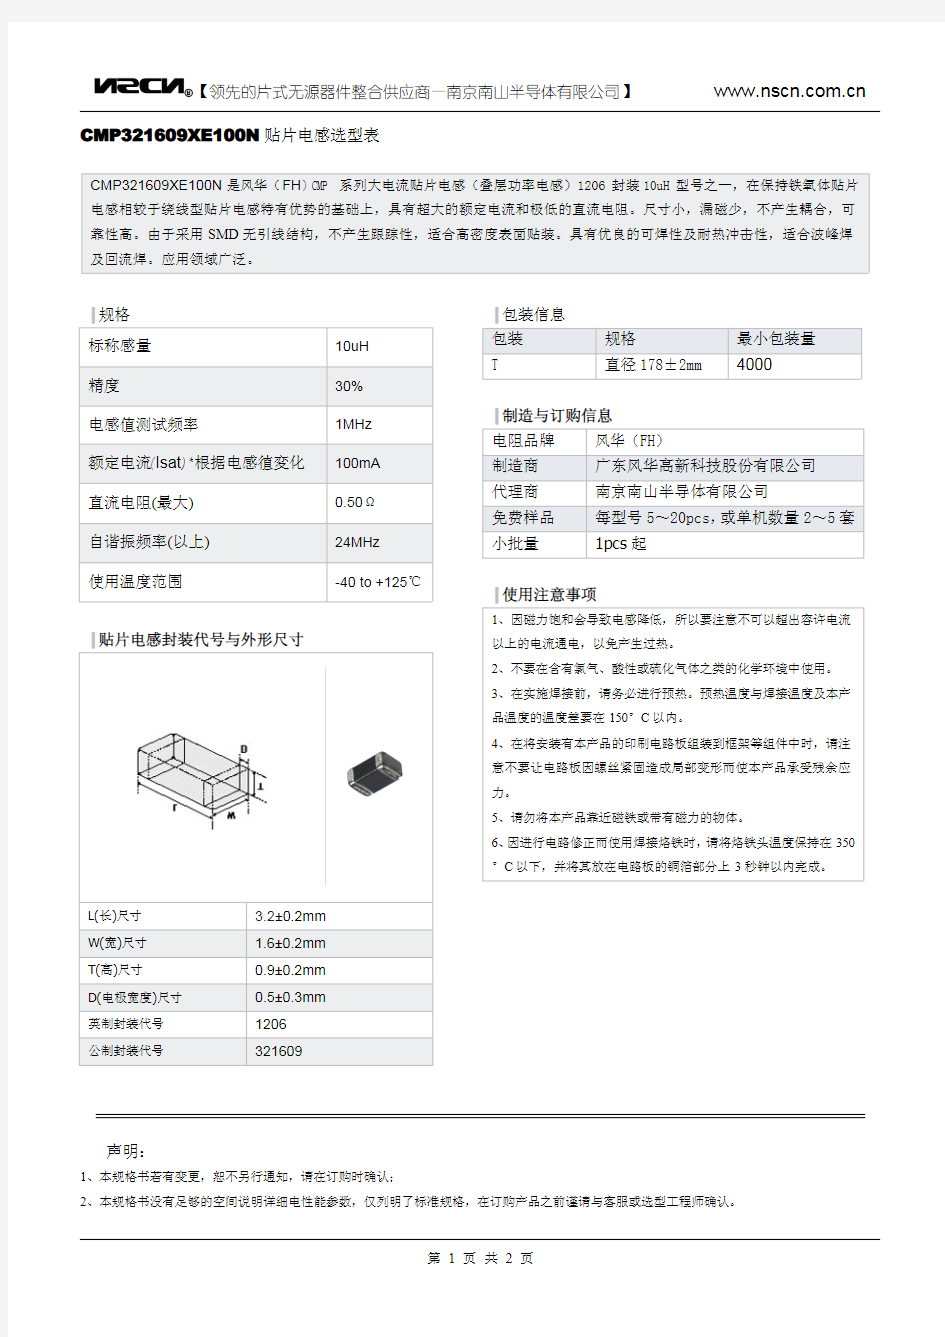 10uh大电流贴片电感CMP321609XE100N